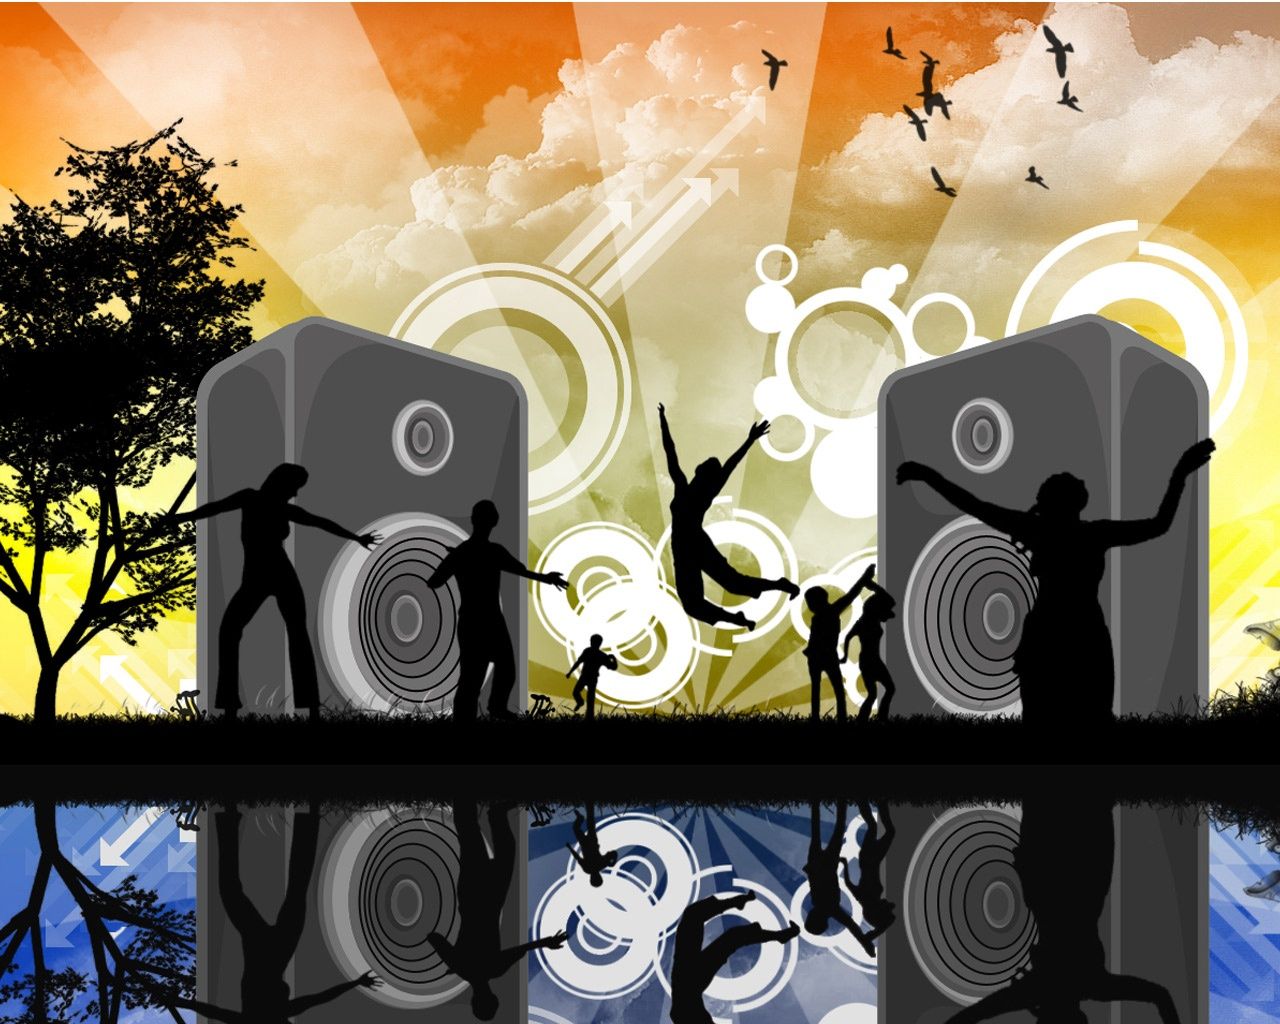 Rave Party wallpaper, music .wallpaperdj.com